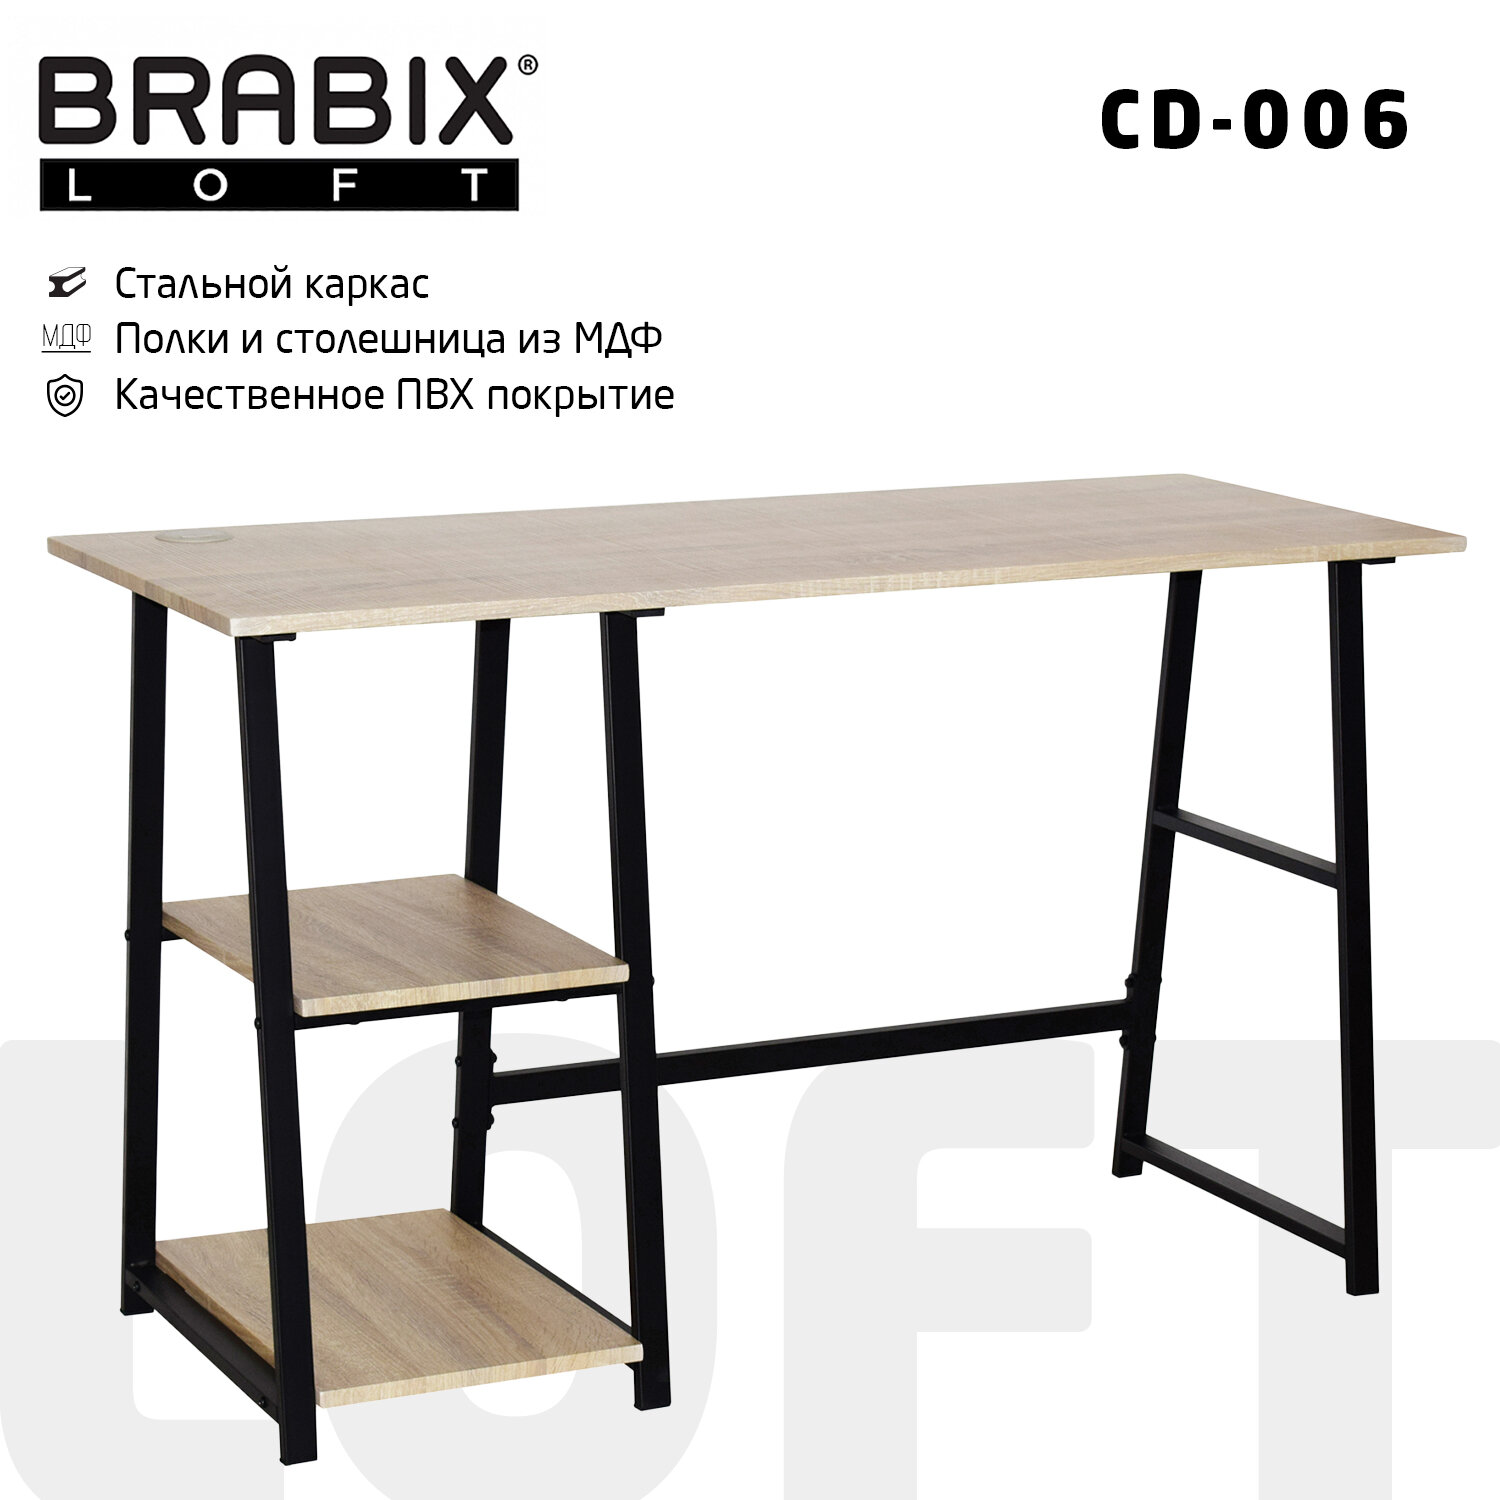 Brabix Стол на металлокаркасе BRABIX LOFT CD-006,1200х500х730 мм,, 2 полки, цвет дуб натуральный, 641226